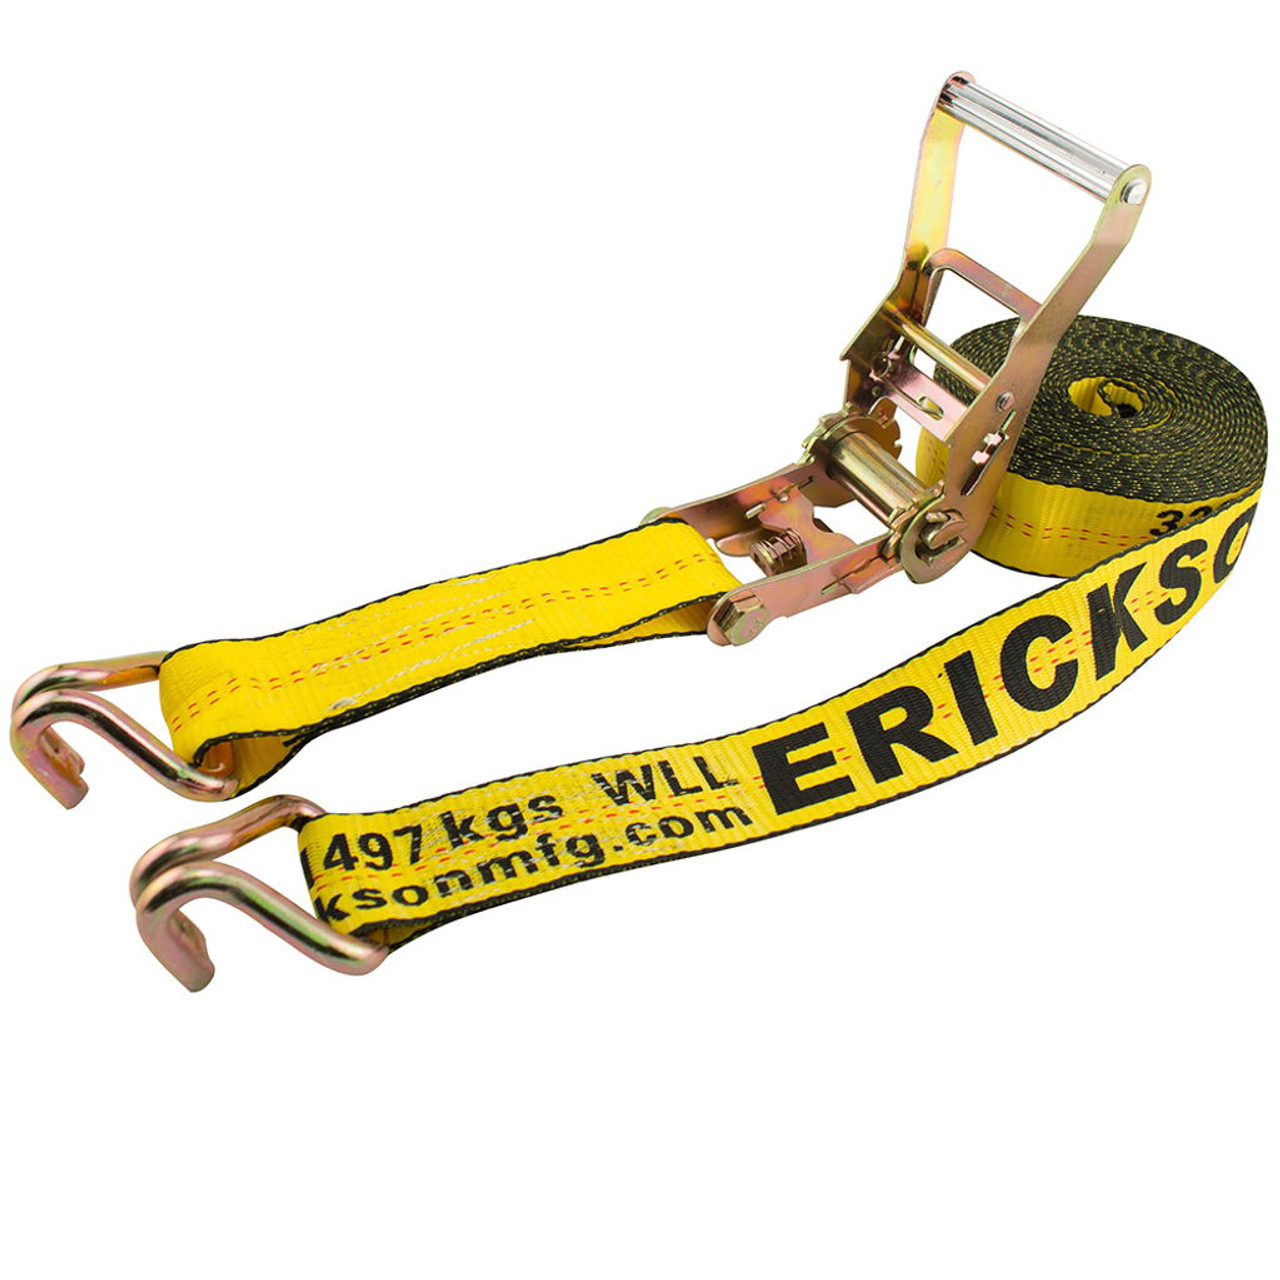 Erickson 2 X 27' Ratchet Strap with Double J-Hooks